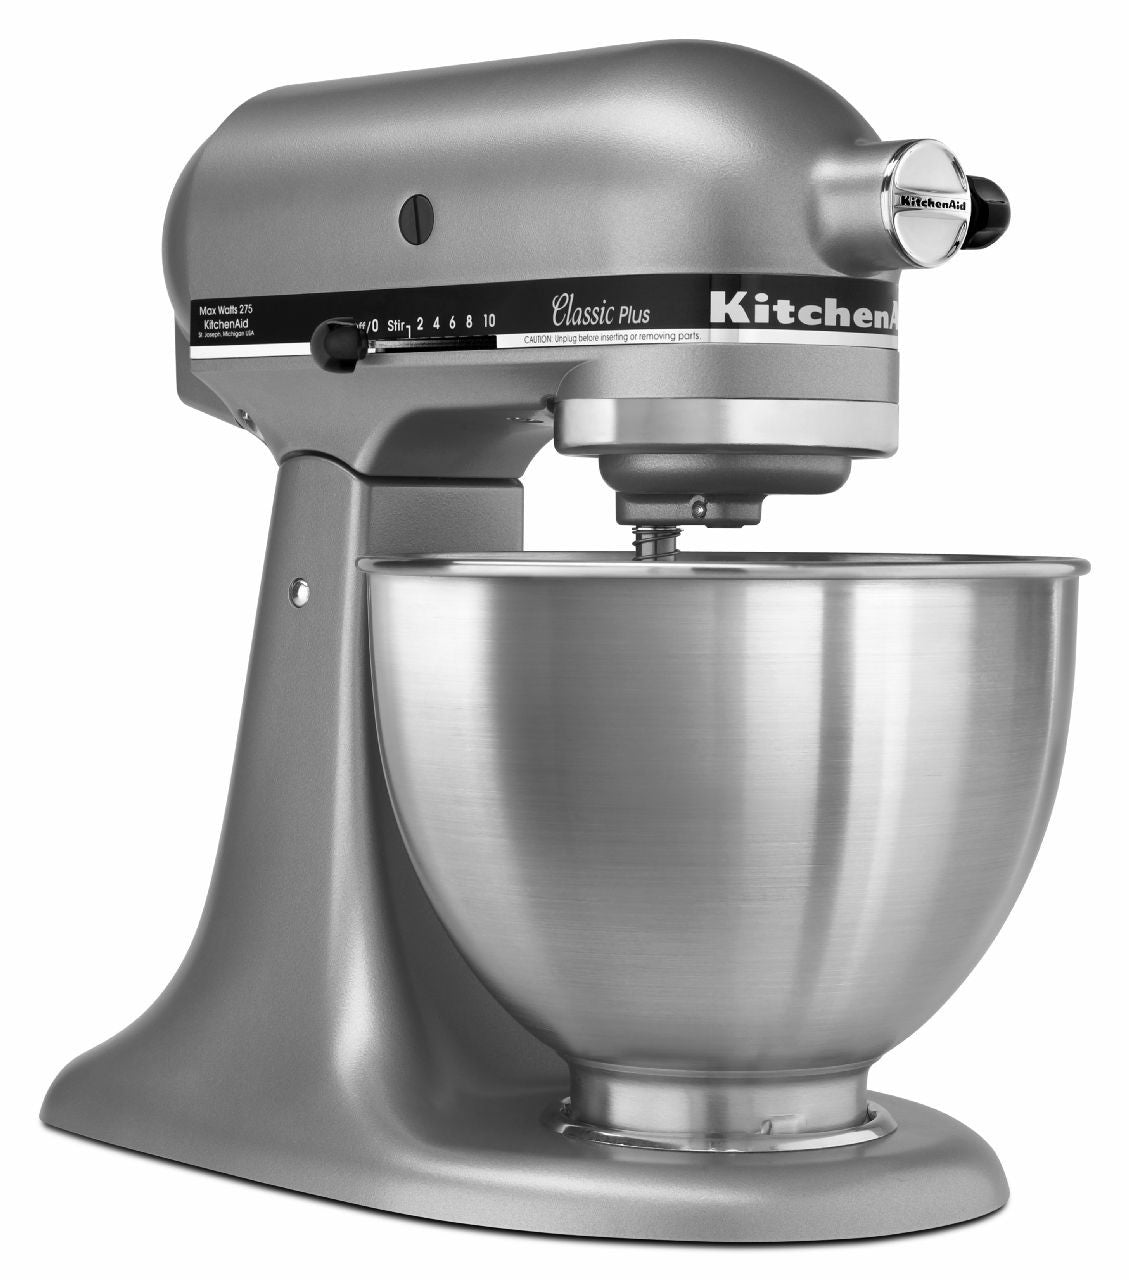 Kitchenaid 4.5 Qt. Classic Plus Stand Mixer - Silver KSM75SL